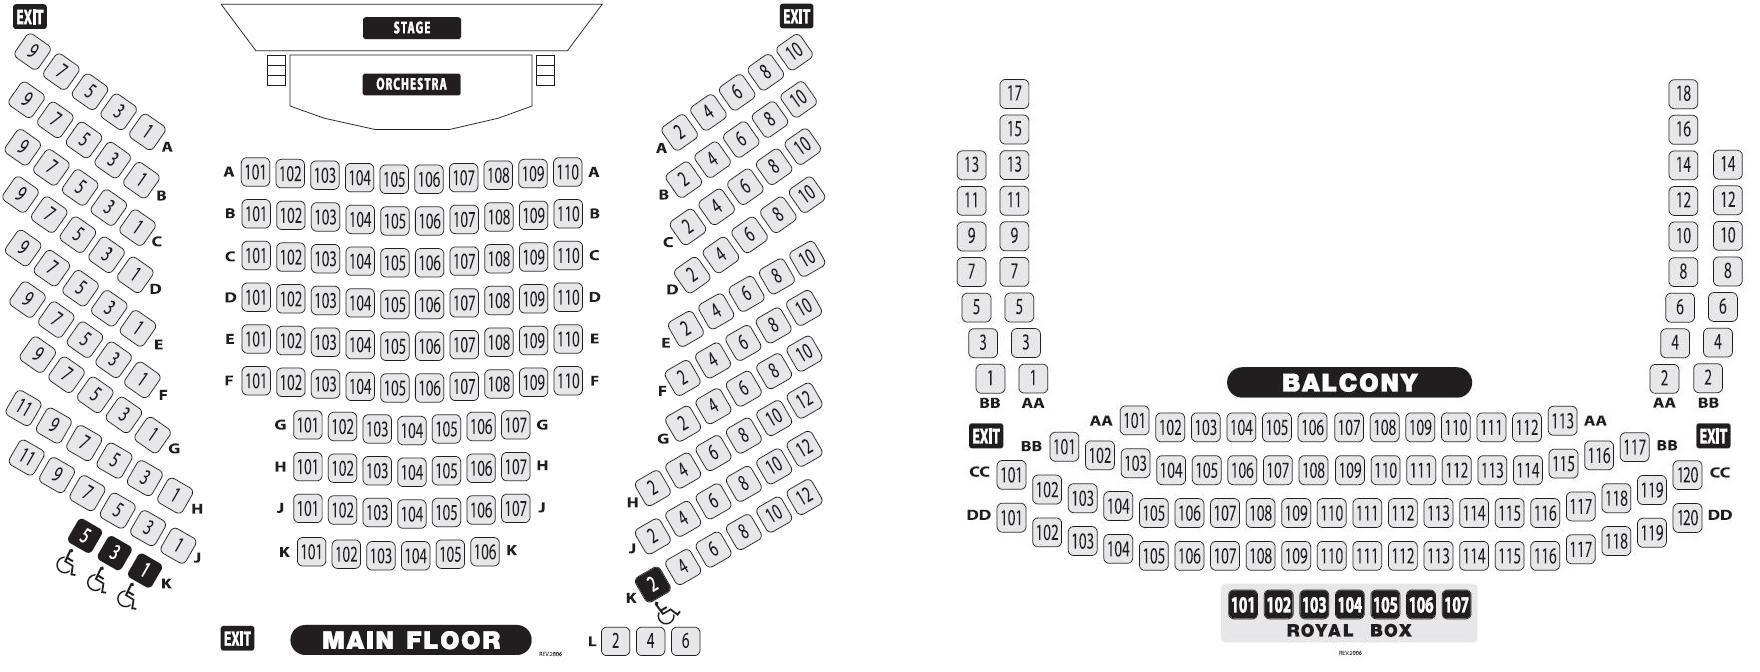 Qpac Seating Chart